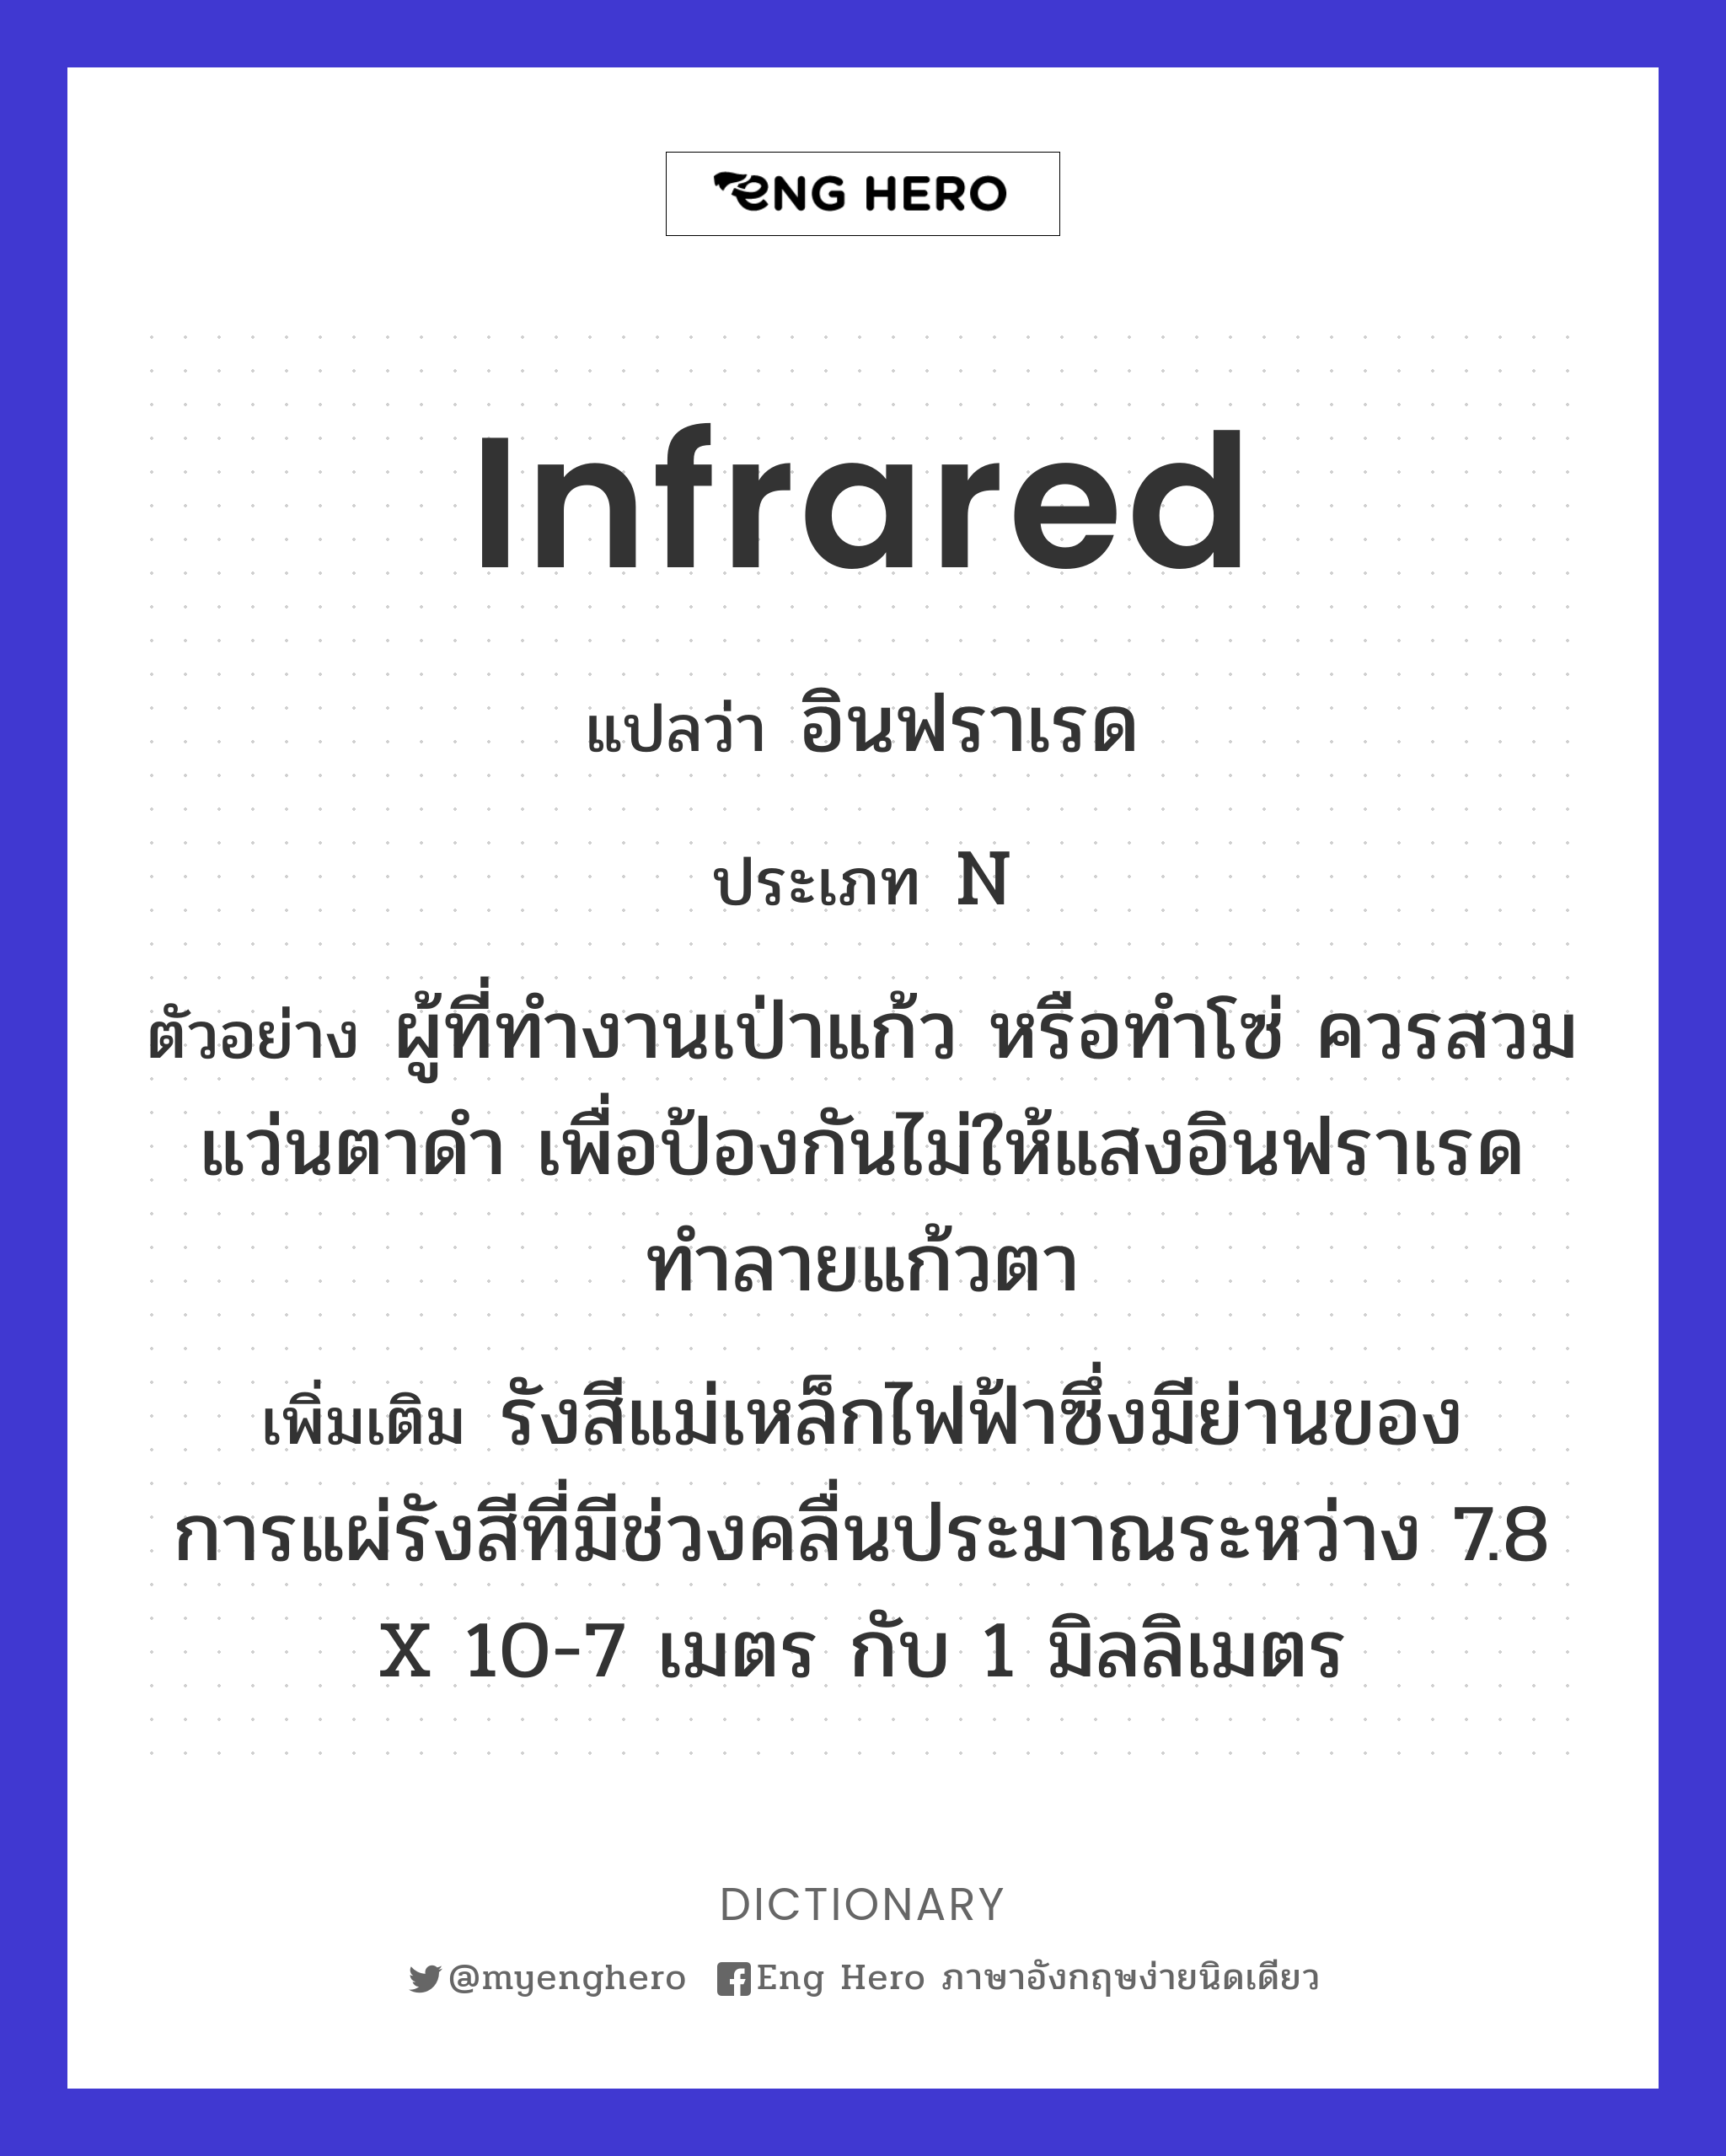 infrared